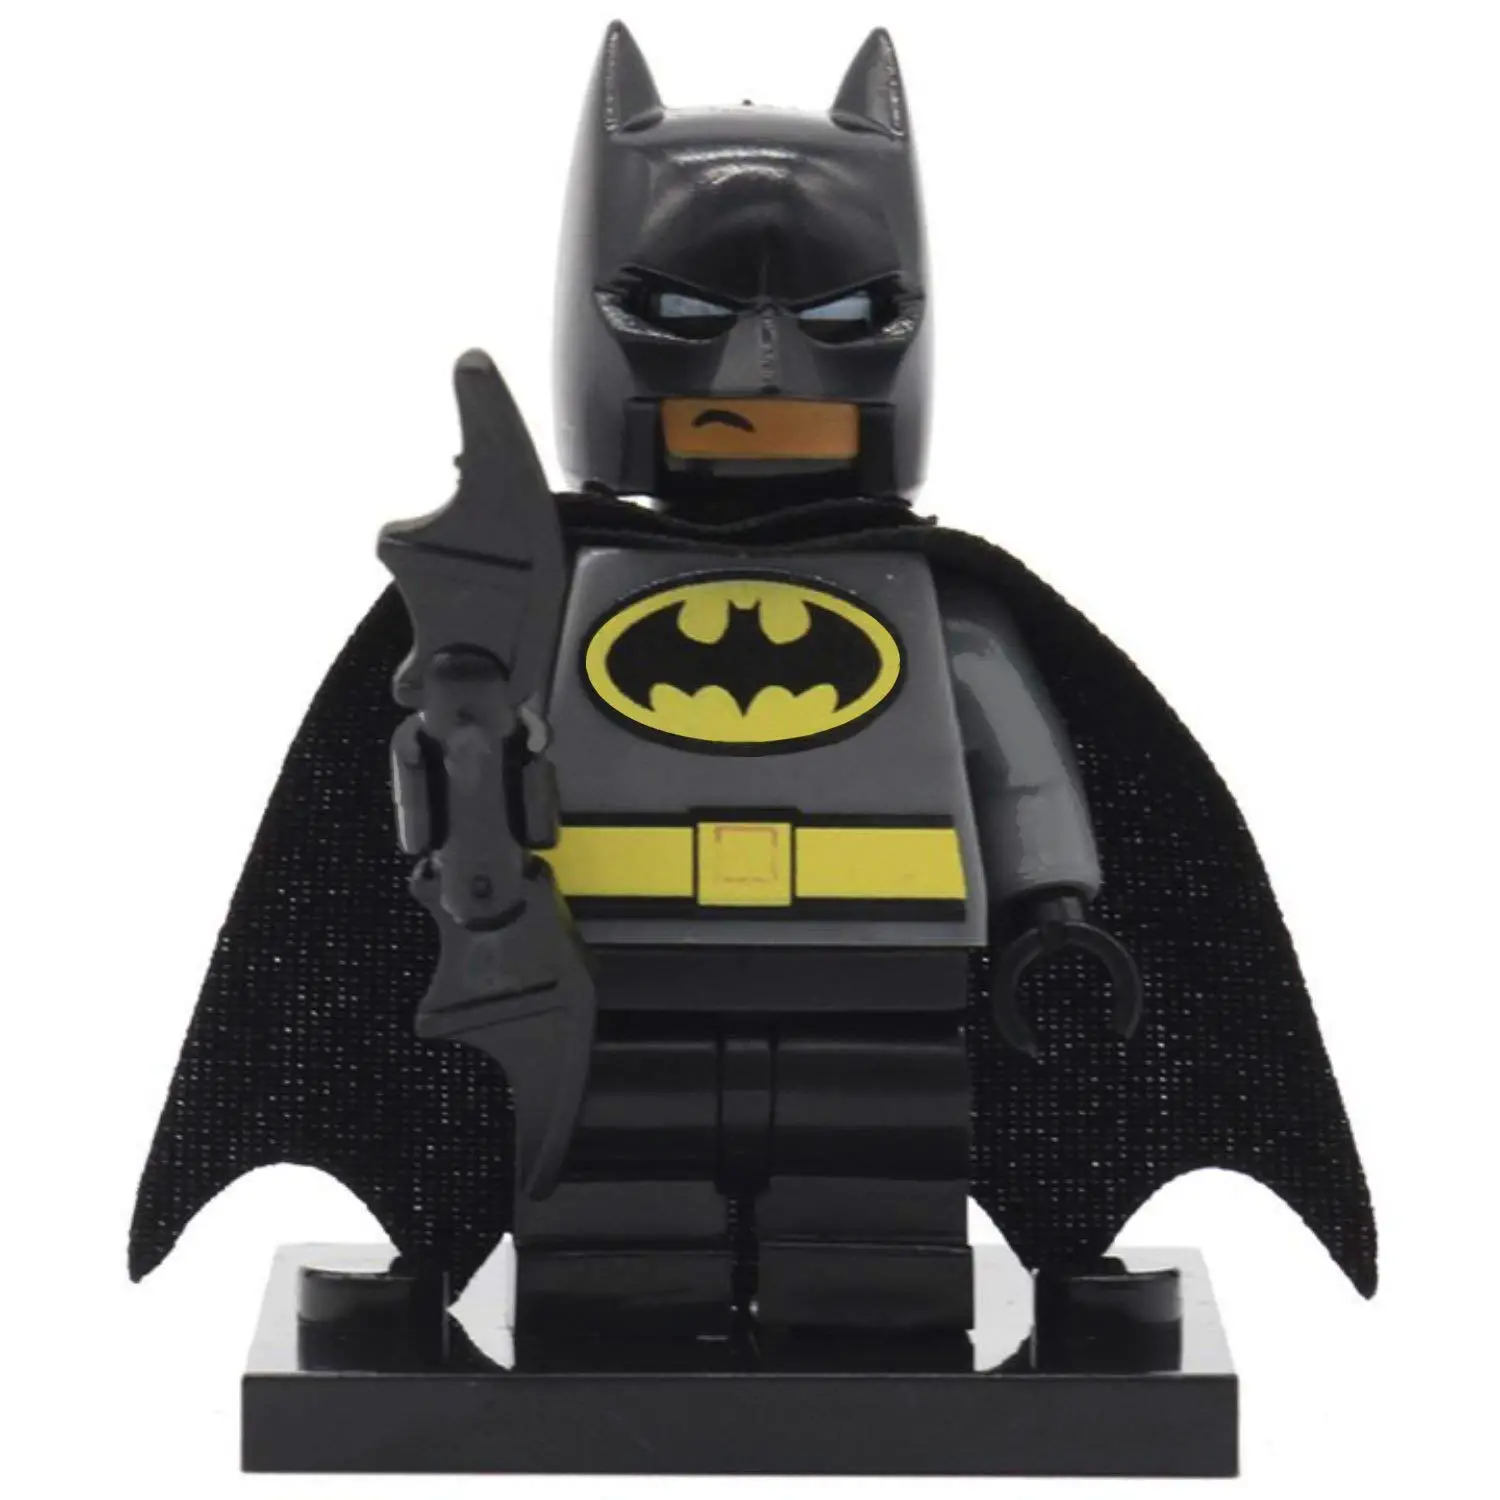 Lego Duplo Superheroes Batman figure